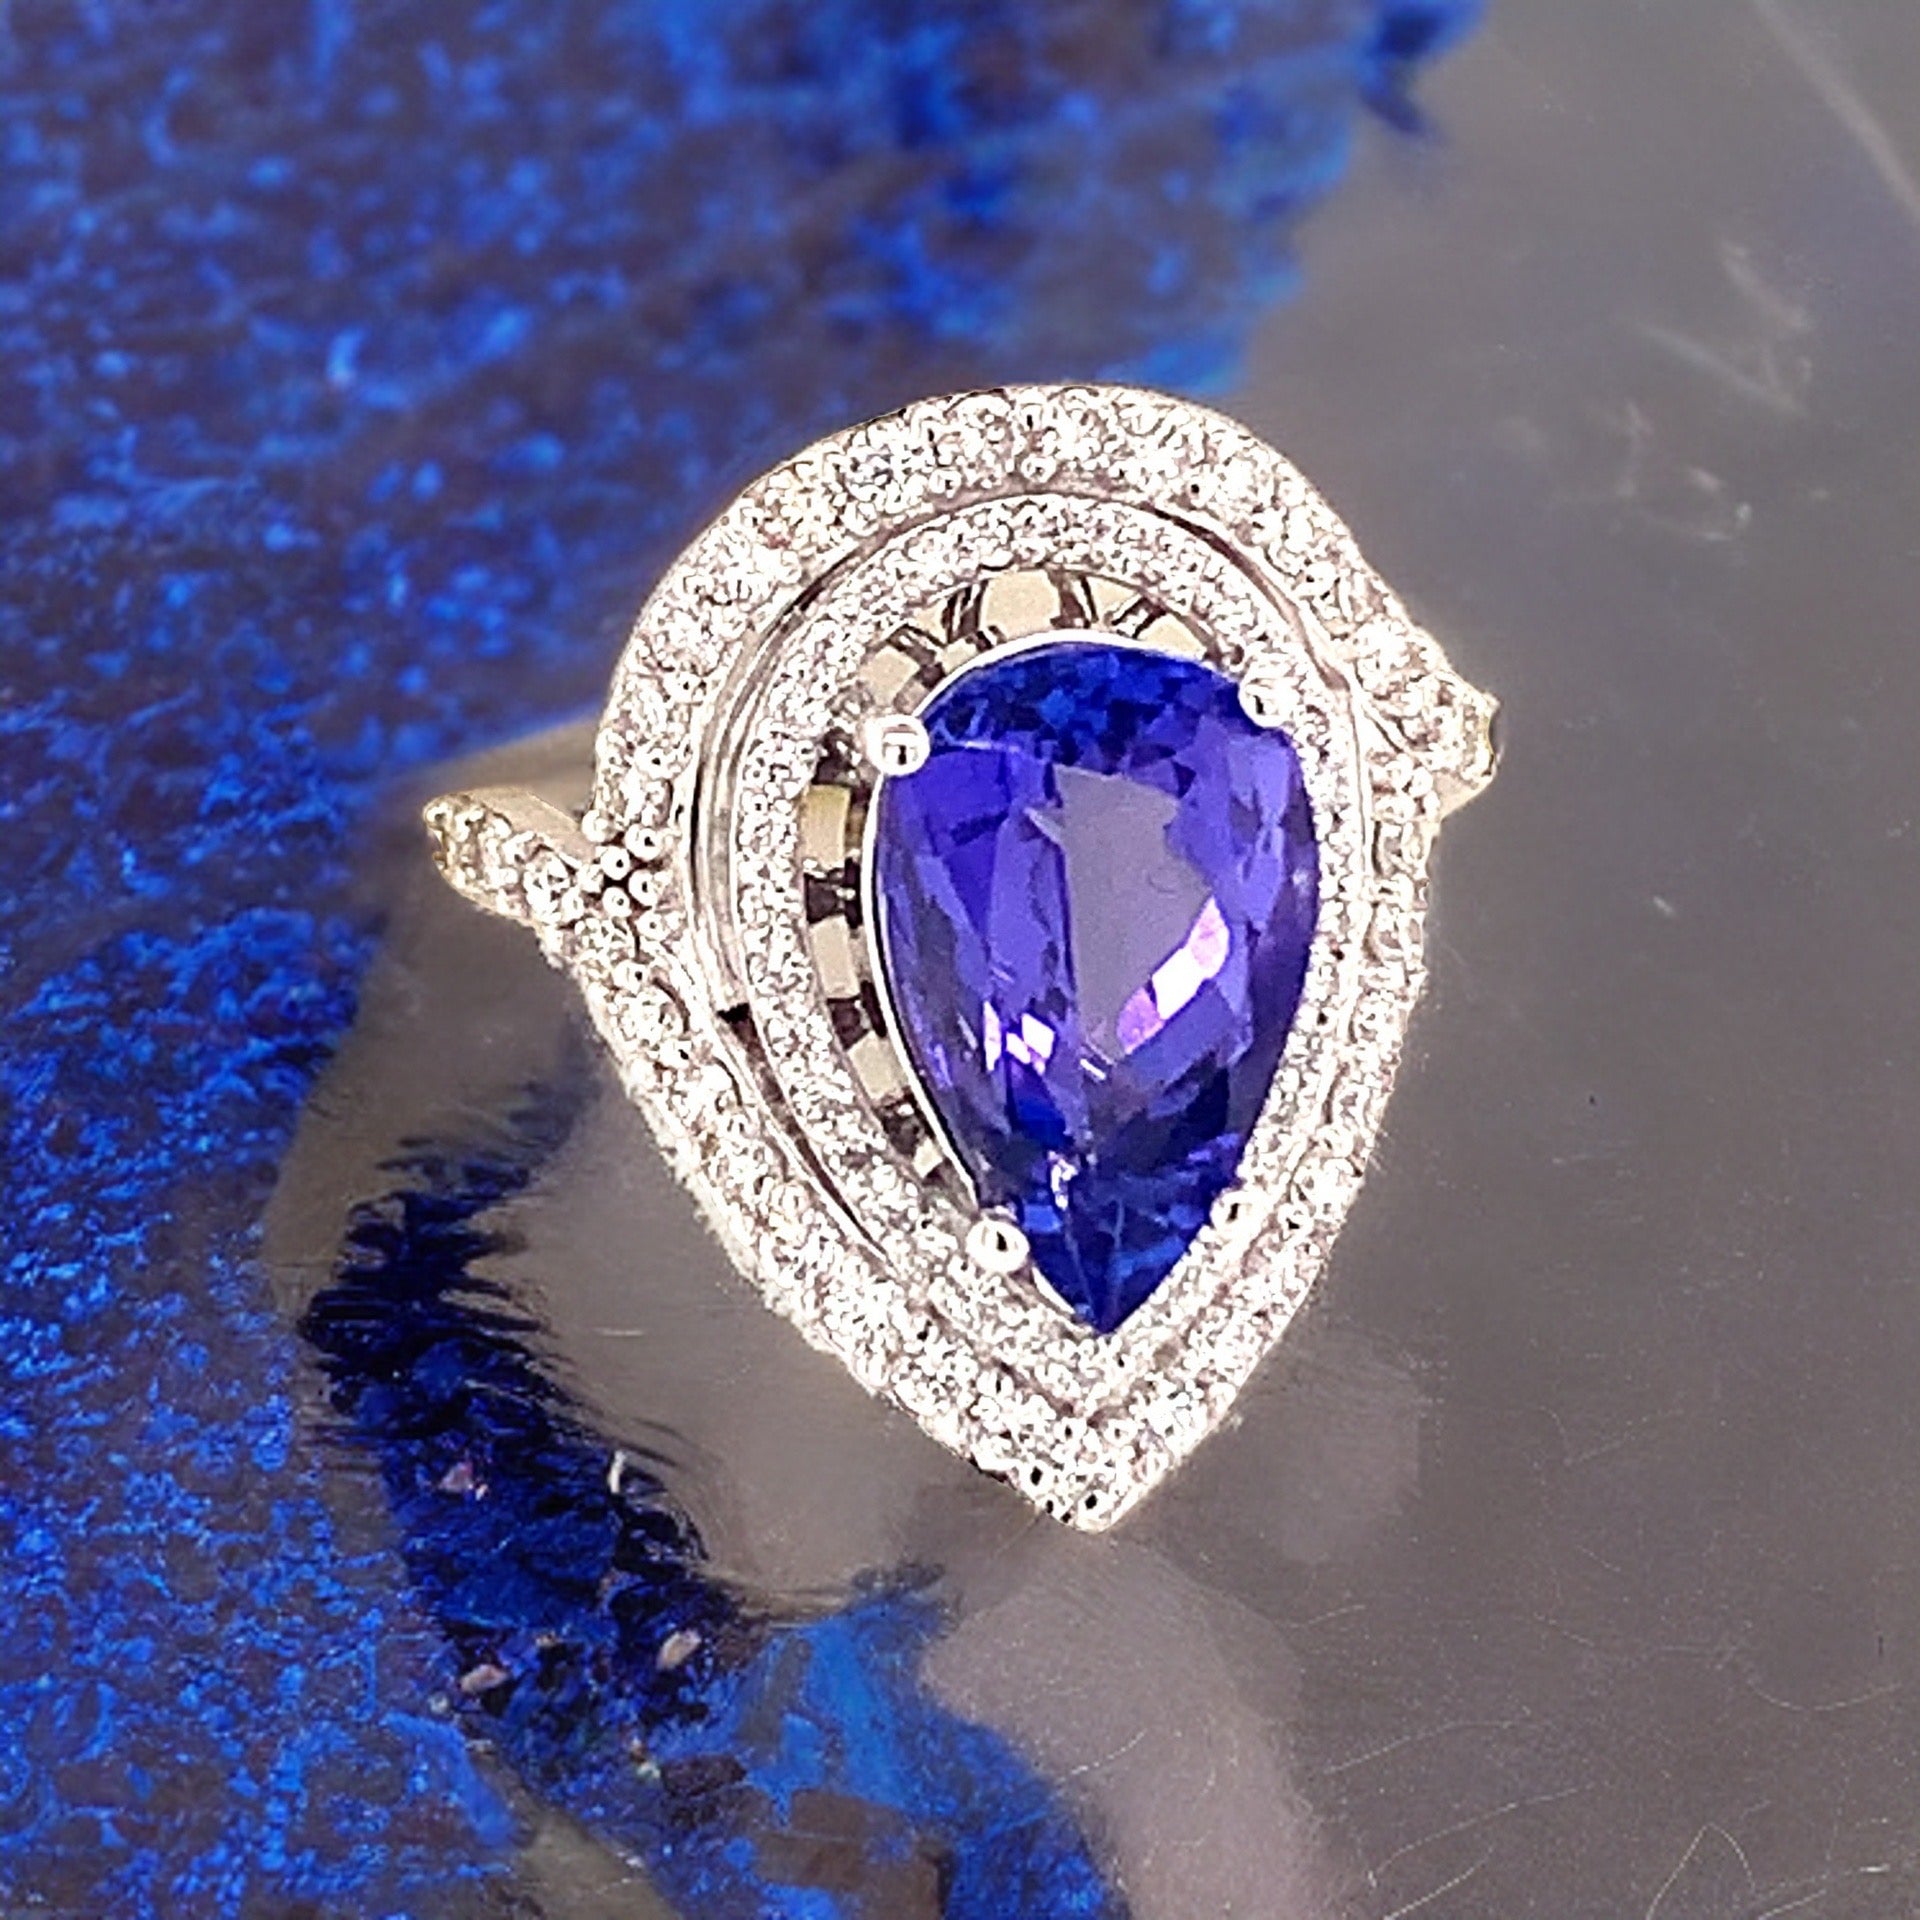 Natural Tanzanite Diamond Ring 14k Gold 4.54 TCW GIA Certified $5,950 111877 - Certified Fine Jewelry